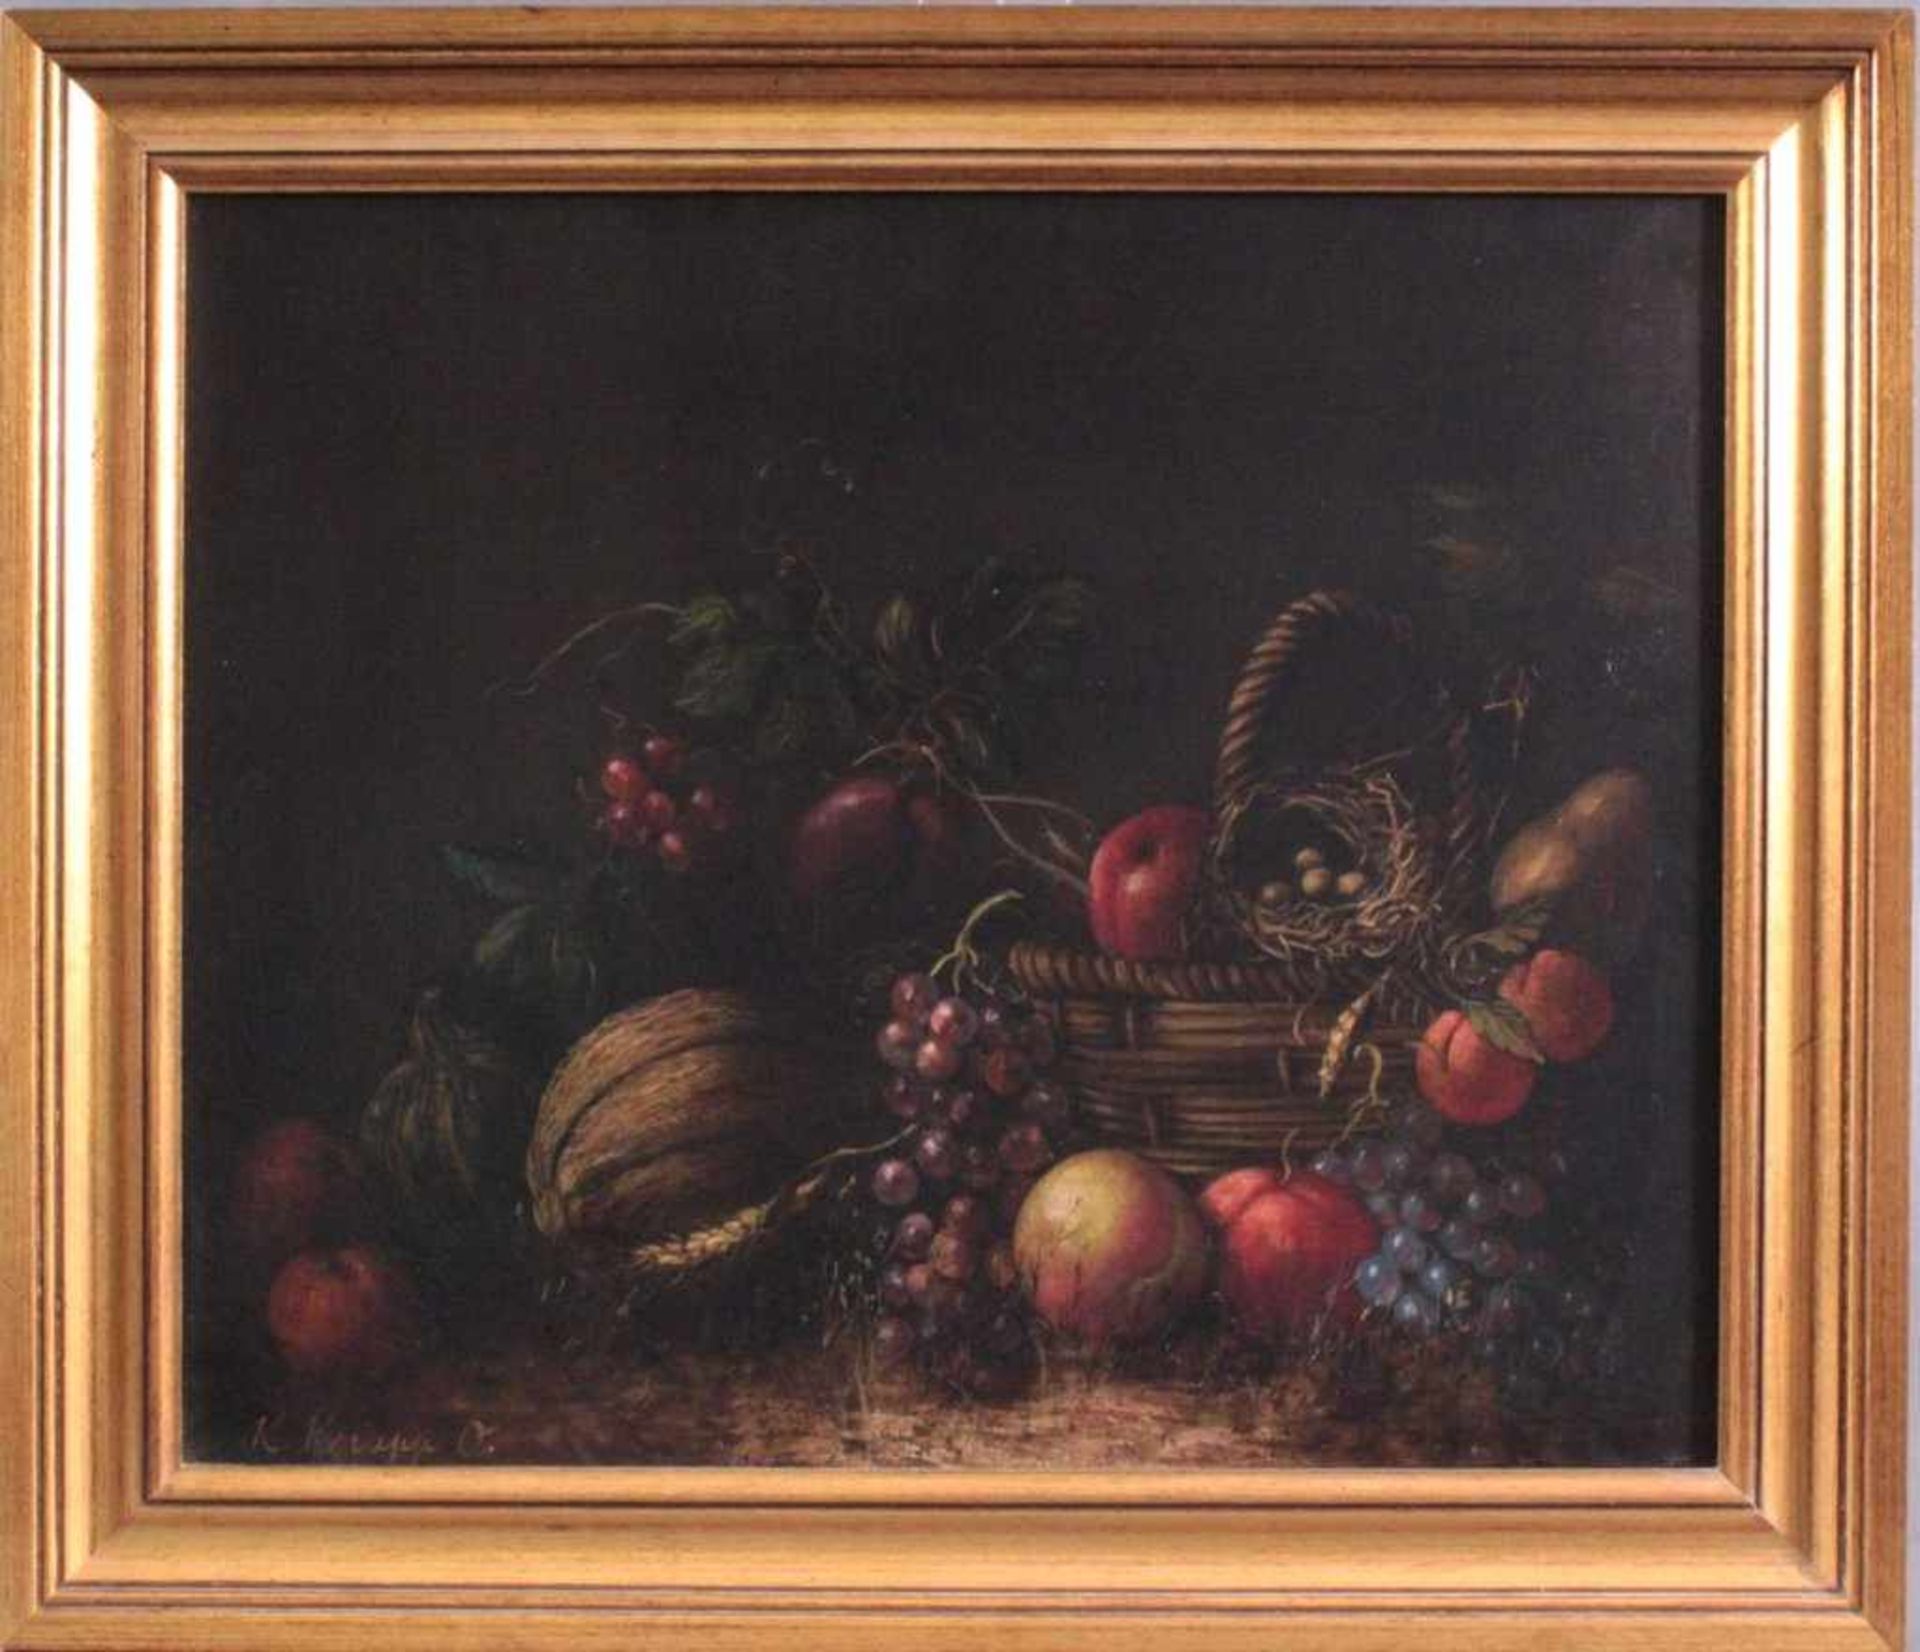 Stillleben mit Obst, 19. Jh., Konrad Knapp 1864-?Öl auf Leinwand gemalt, gerahmt, ca. 492 x 58 cm.